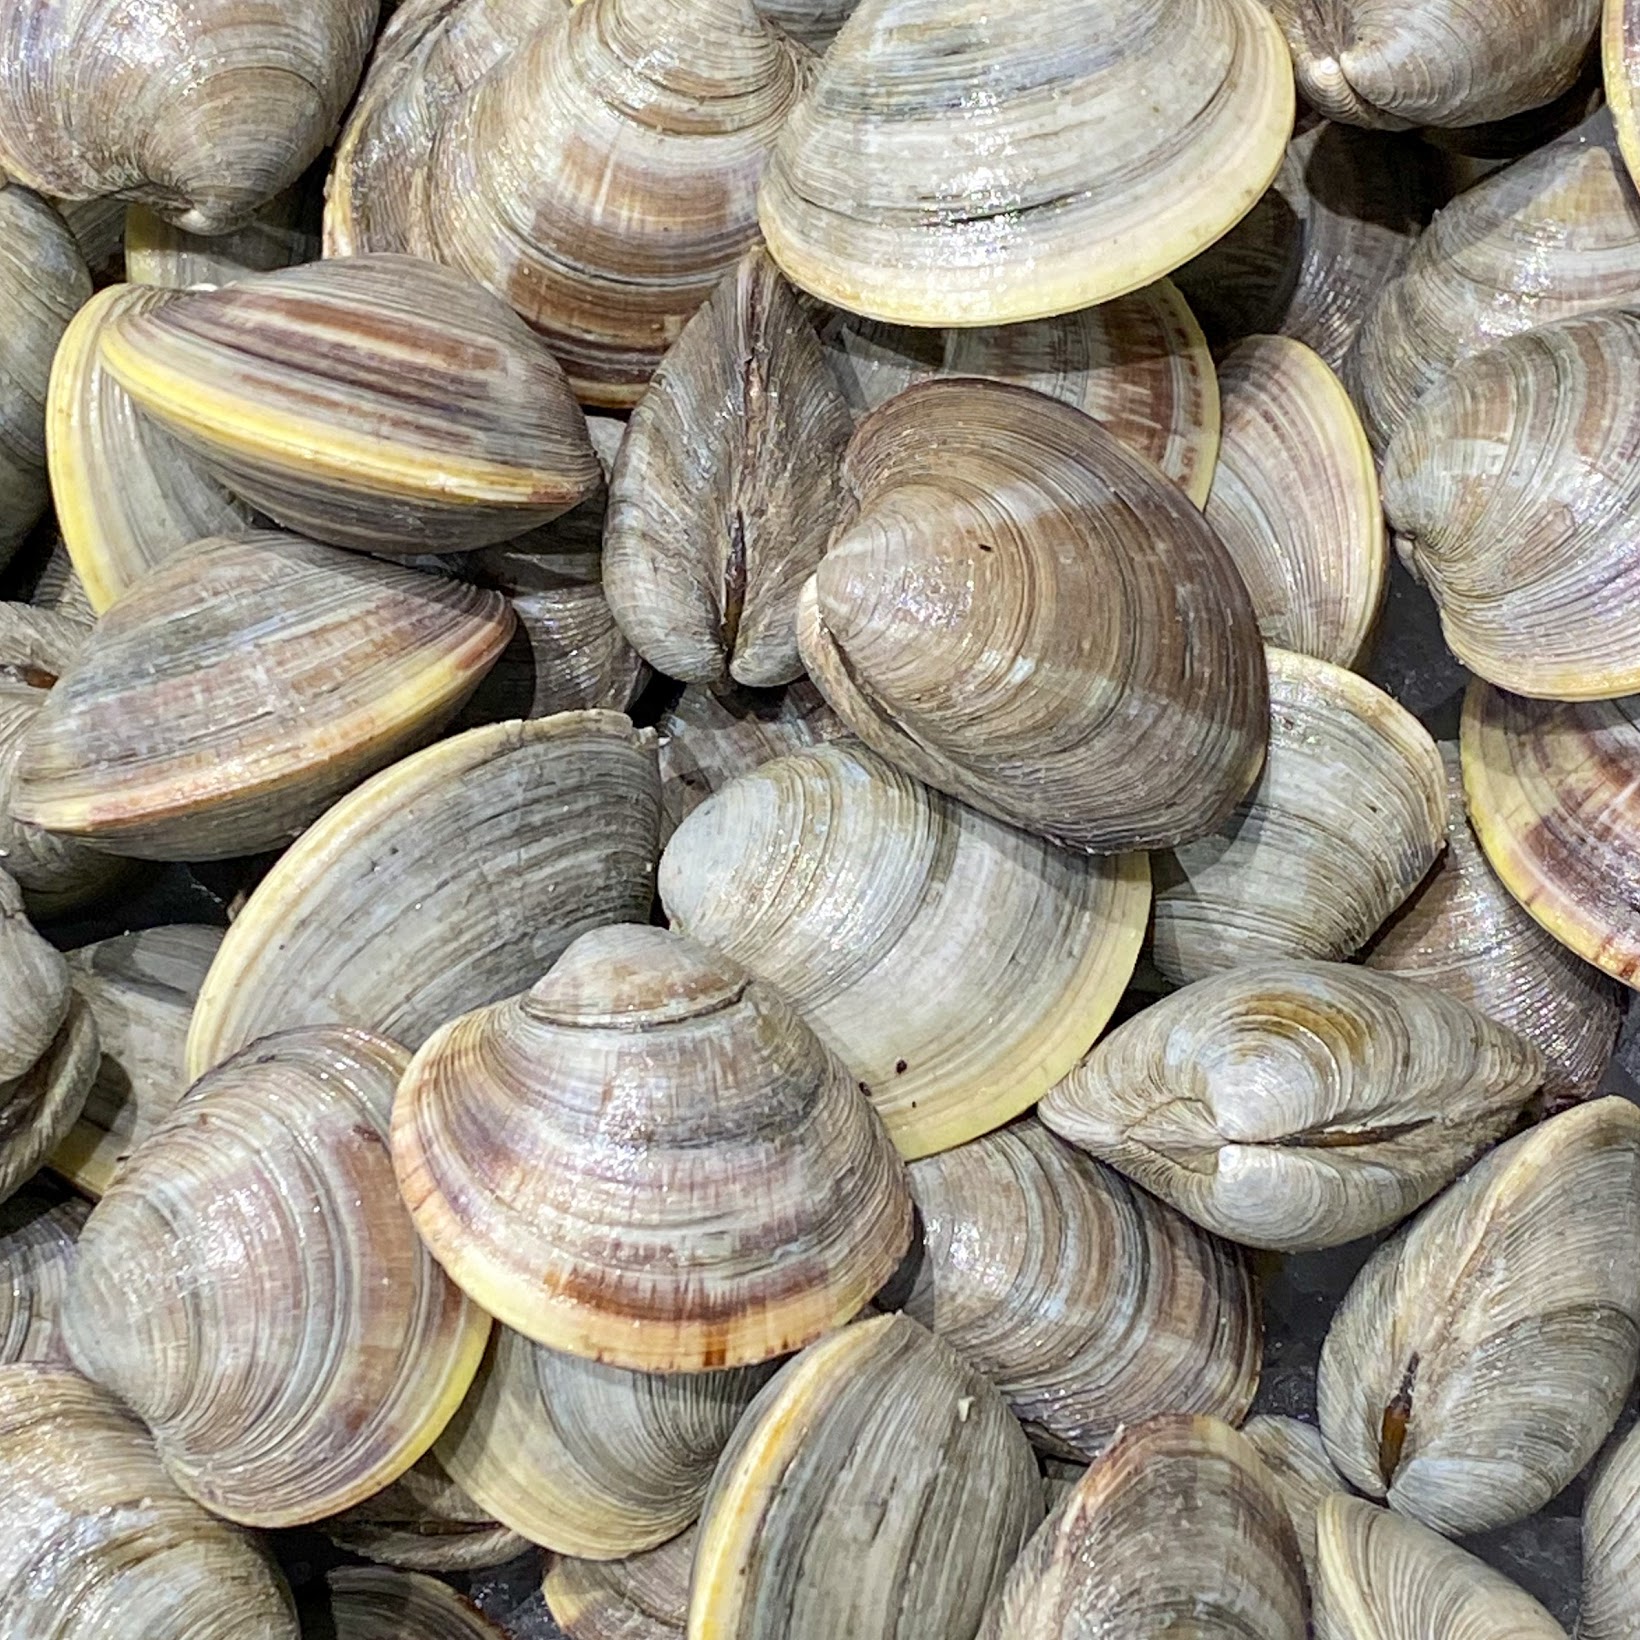 Premium Live Hard Shell Clams • Harbor Fish Market